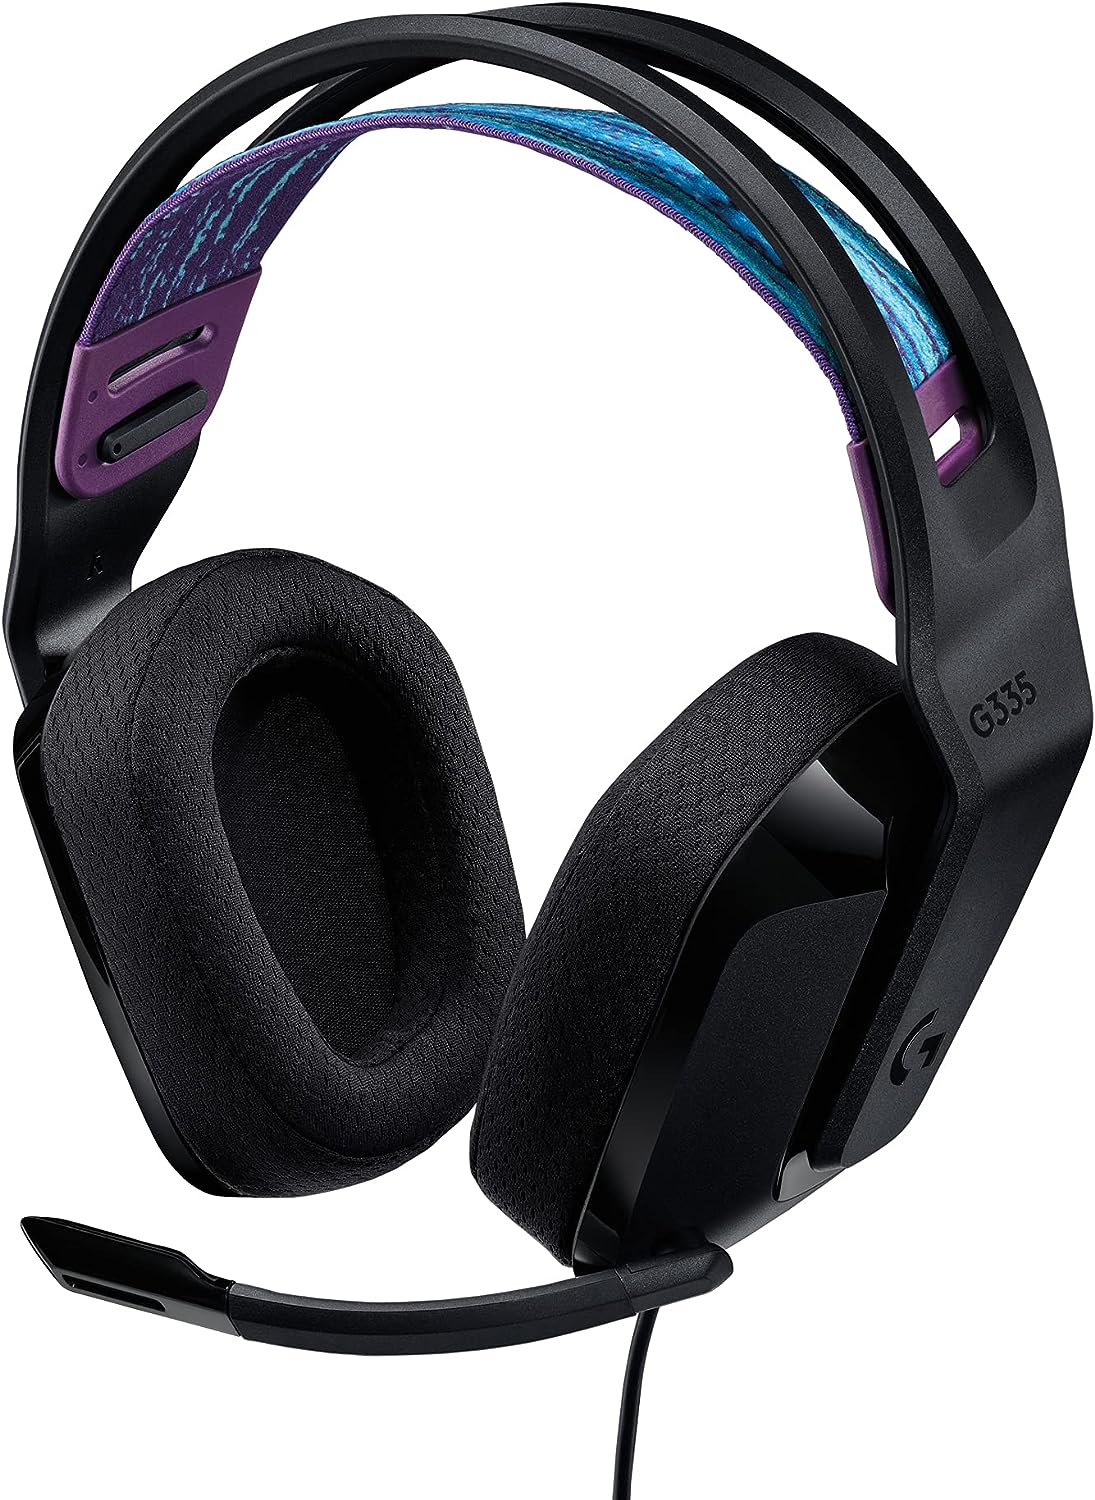 Logitech G335 Wired Gaming Headset سماعات كيمنك لوجتك